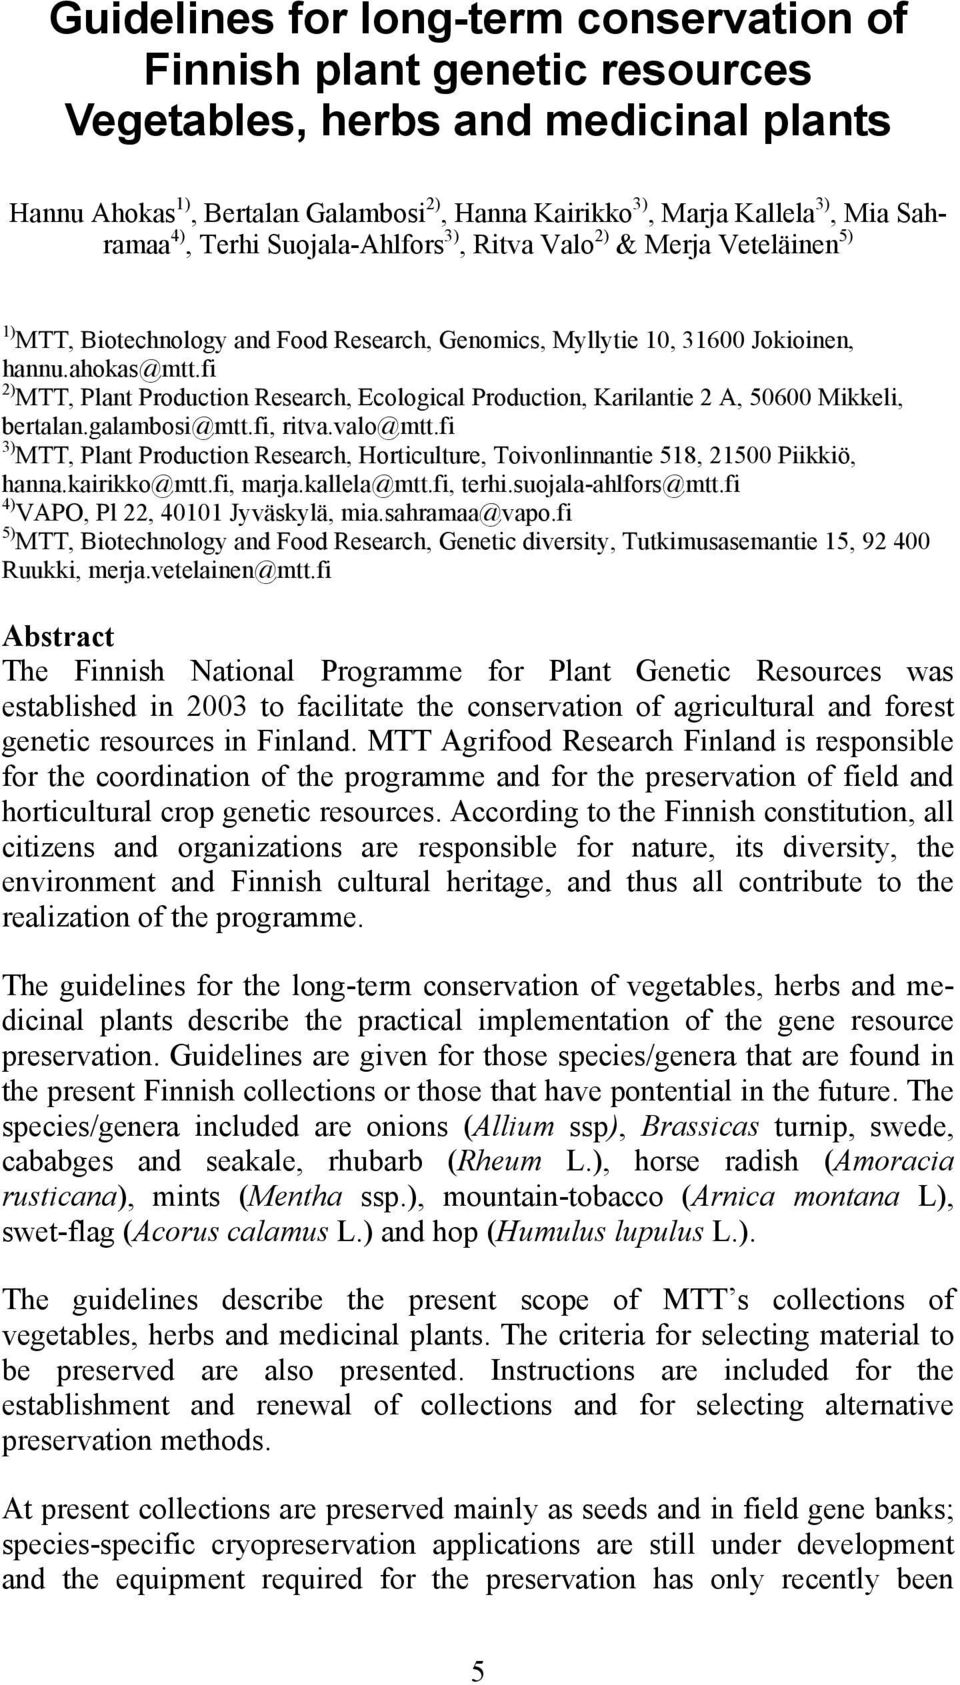 fi 2) MTT, Plant Production Research, Ecological Production, Karilantie 2 A, 50600 Mikkeli, bertalan.galambosi@mtt.fi, ritva.valo@mtt.